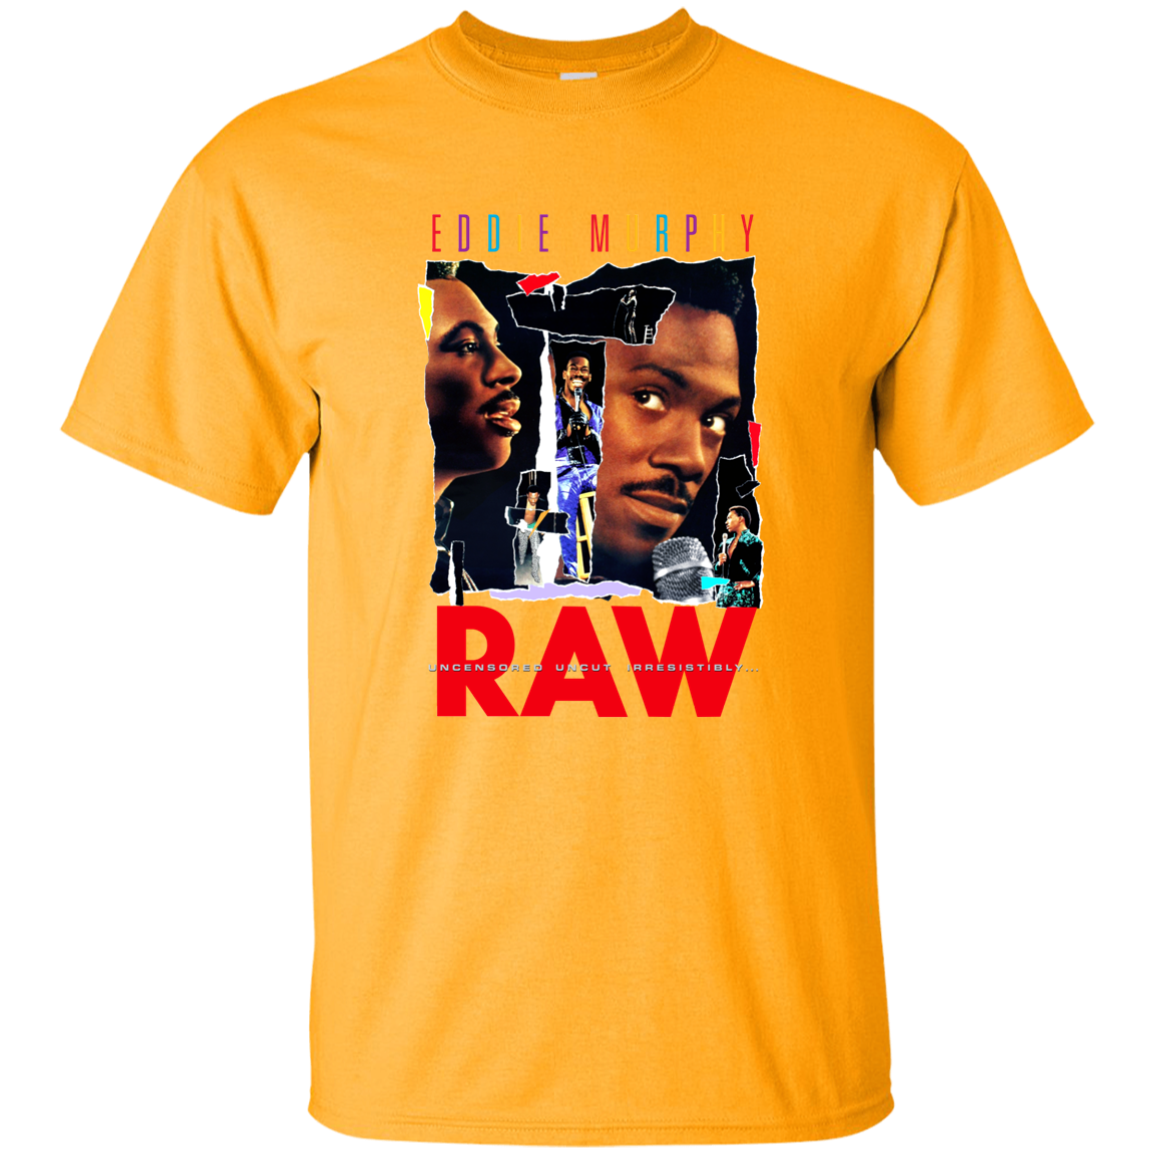 eddie murphy raw shirt